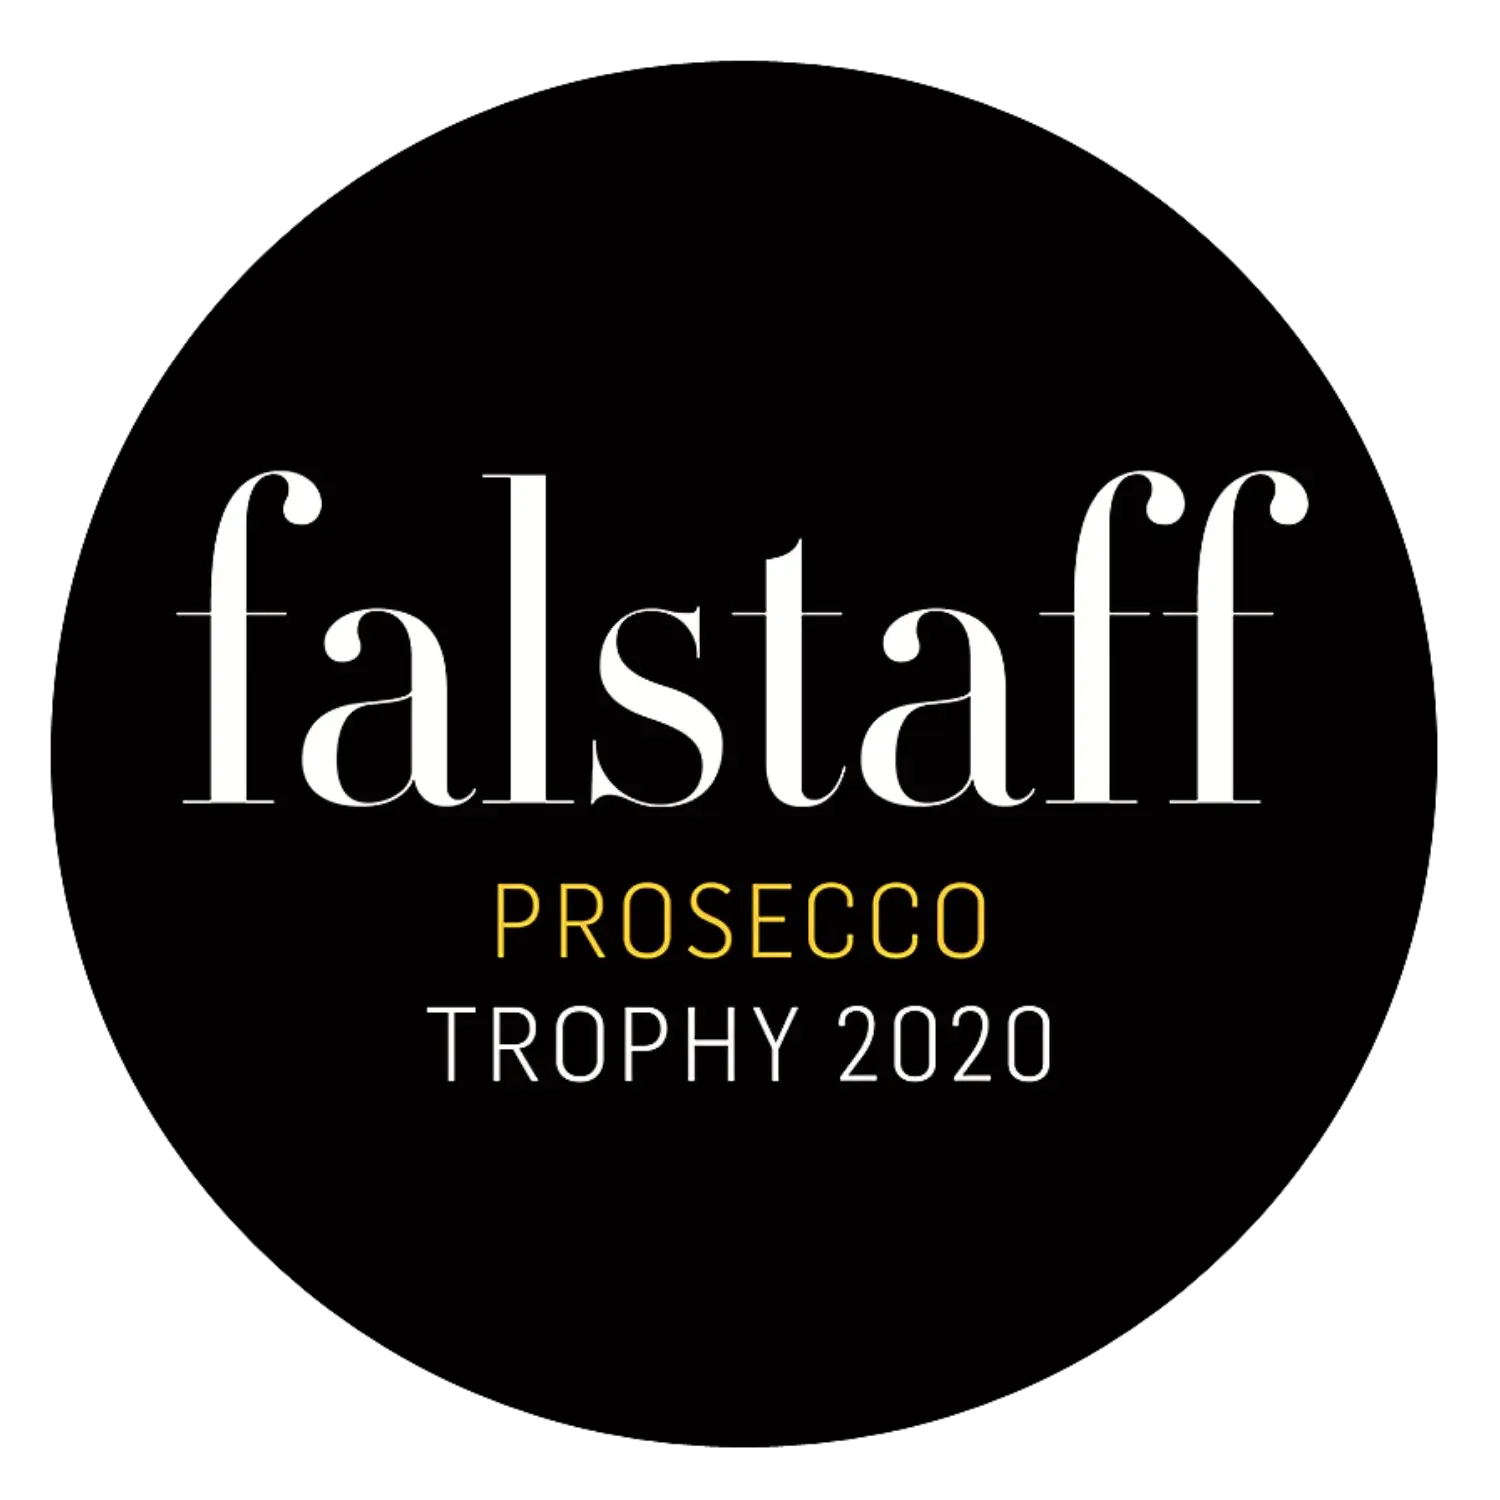 sigla neagra cu text alb "falstaff prosecco trophy 2020"